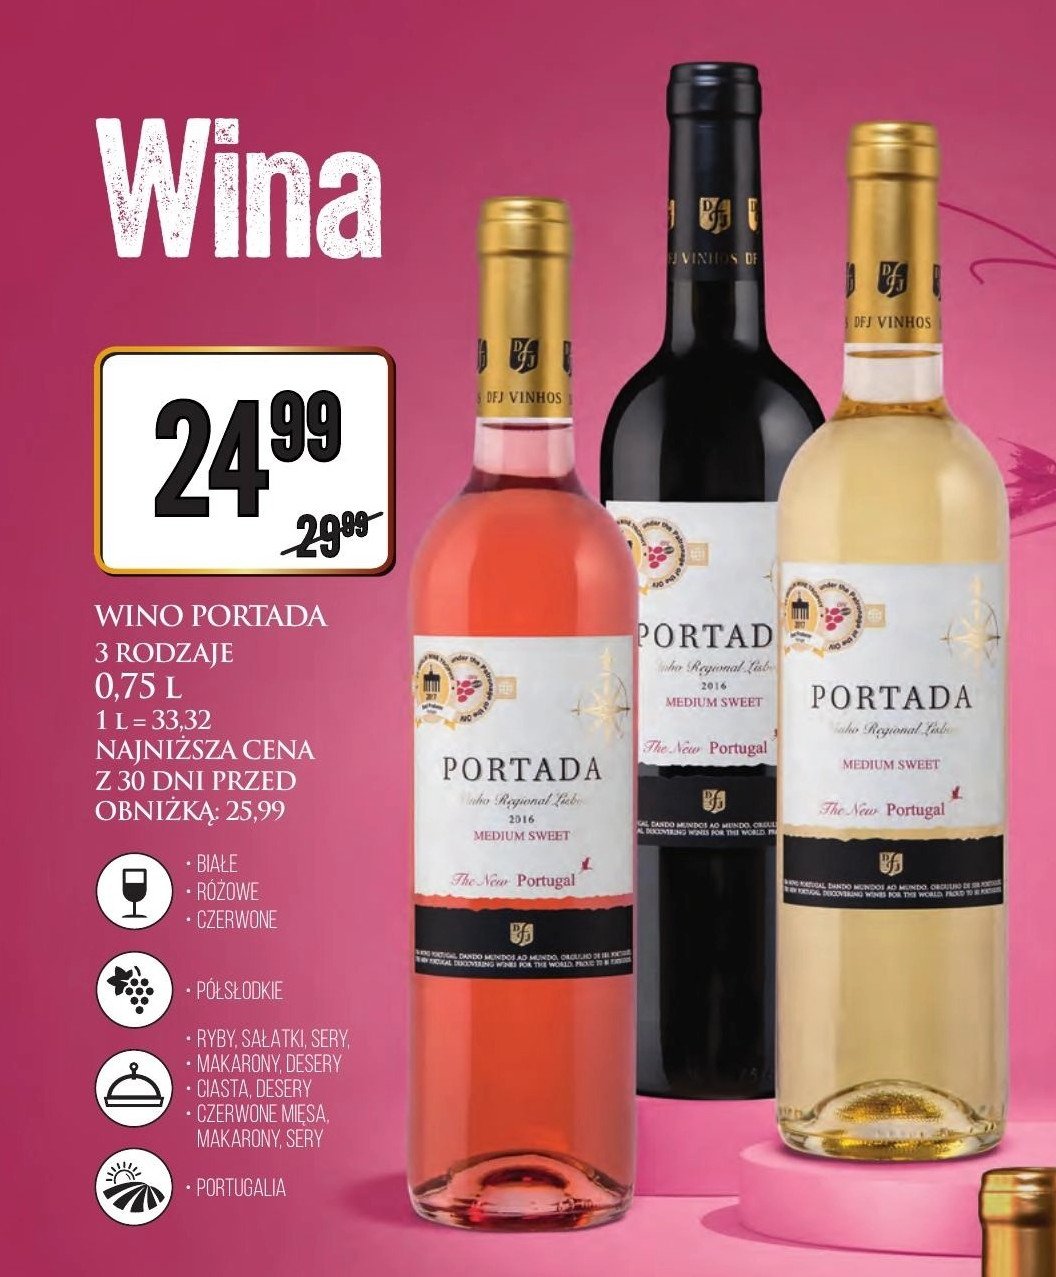 Wino Portada lisboa medium sweet promocja